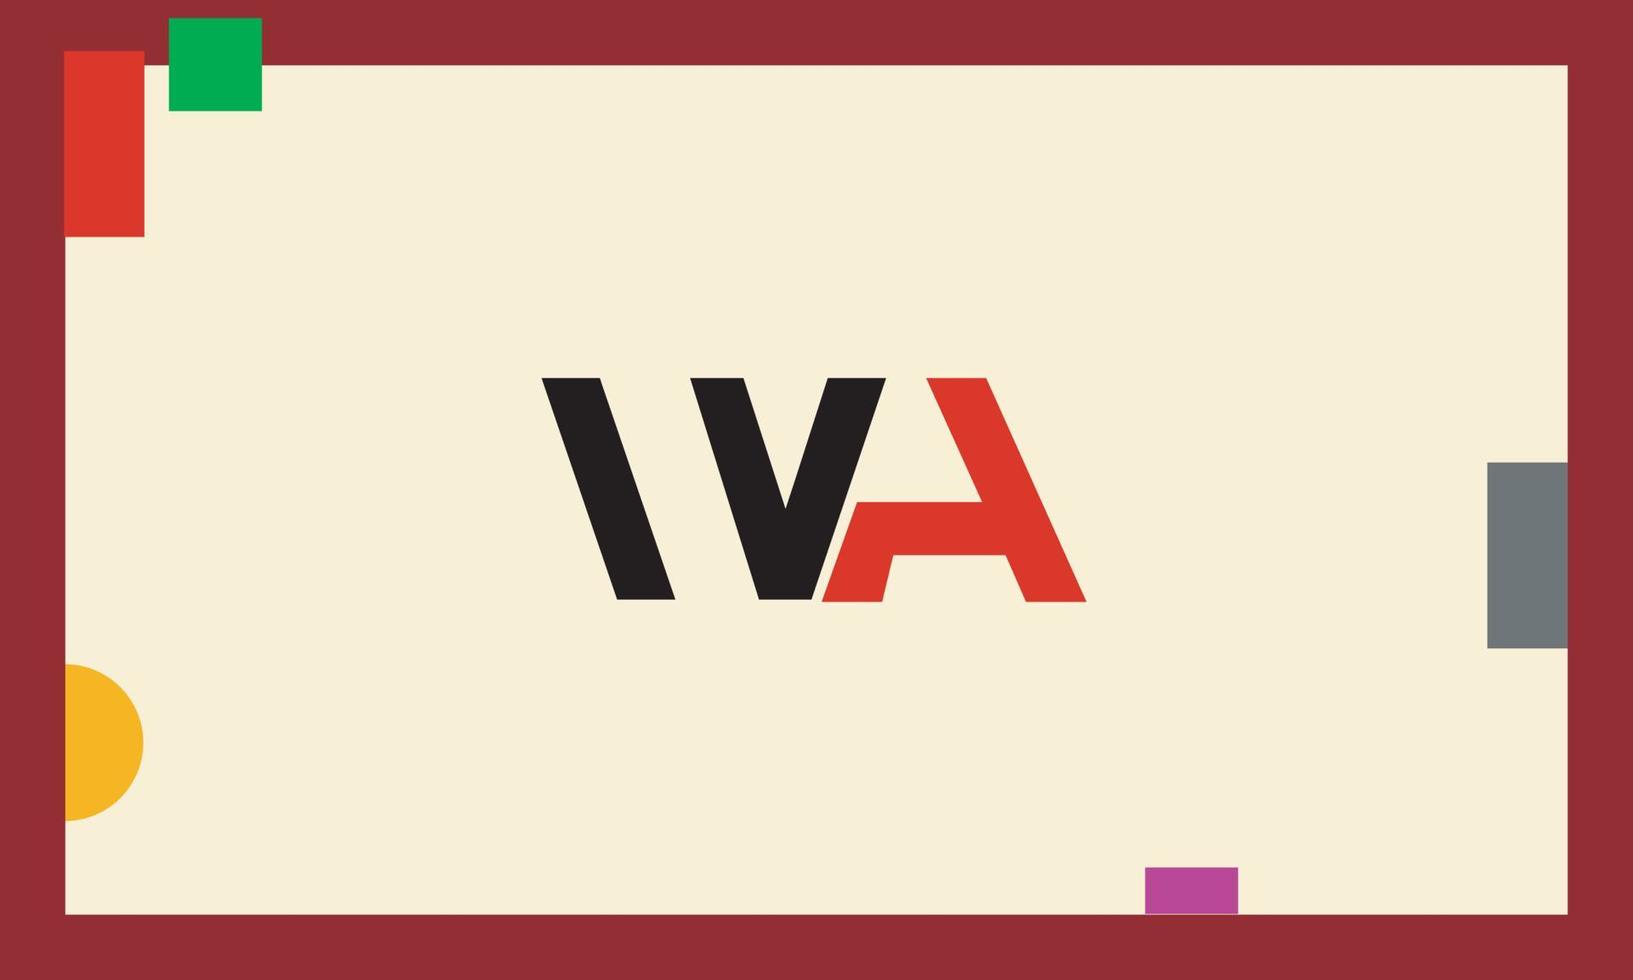 alfabet letters initialen monogram logo wa, aw, w en a vector